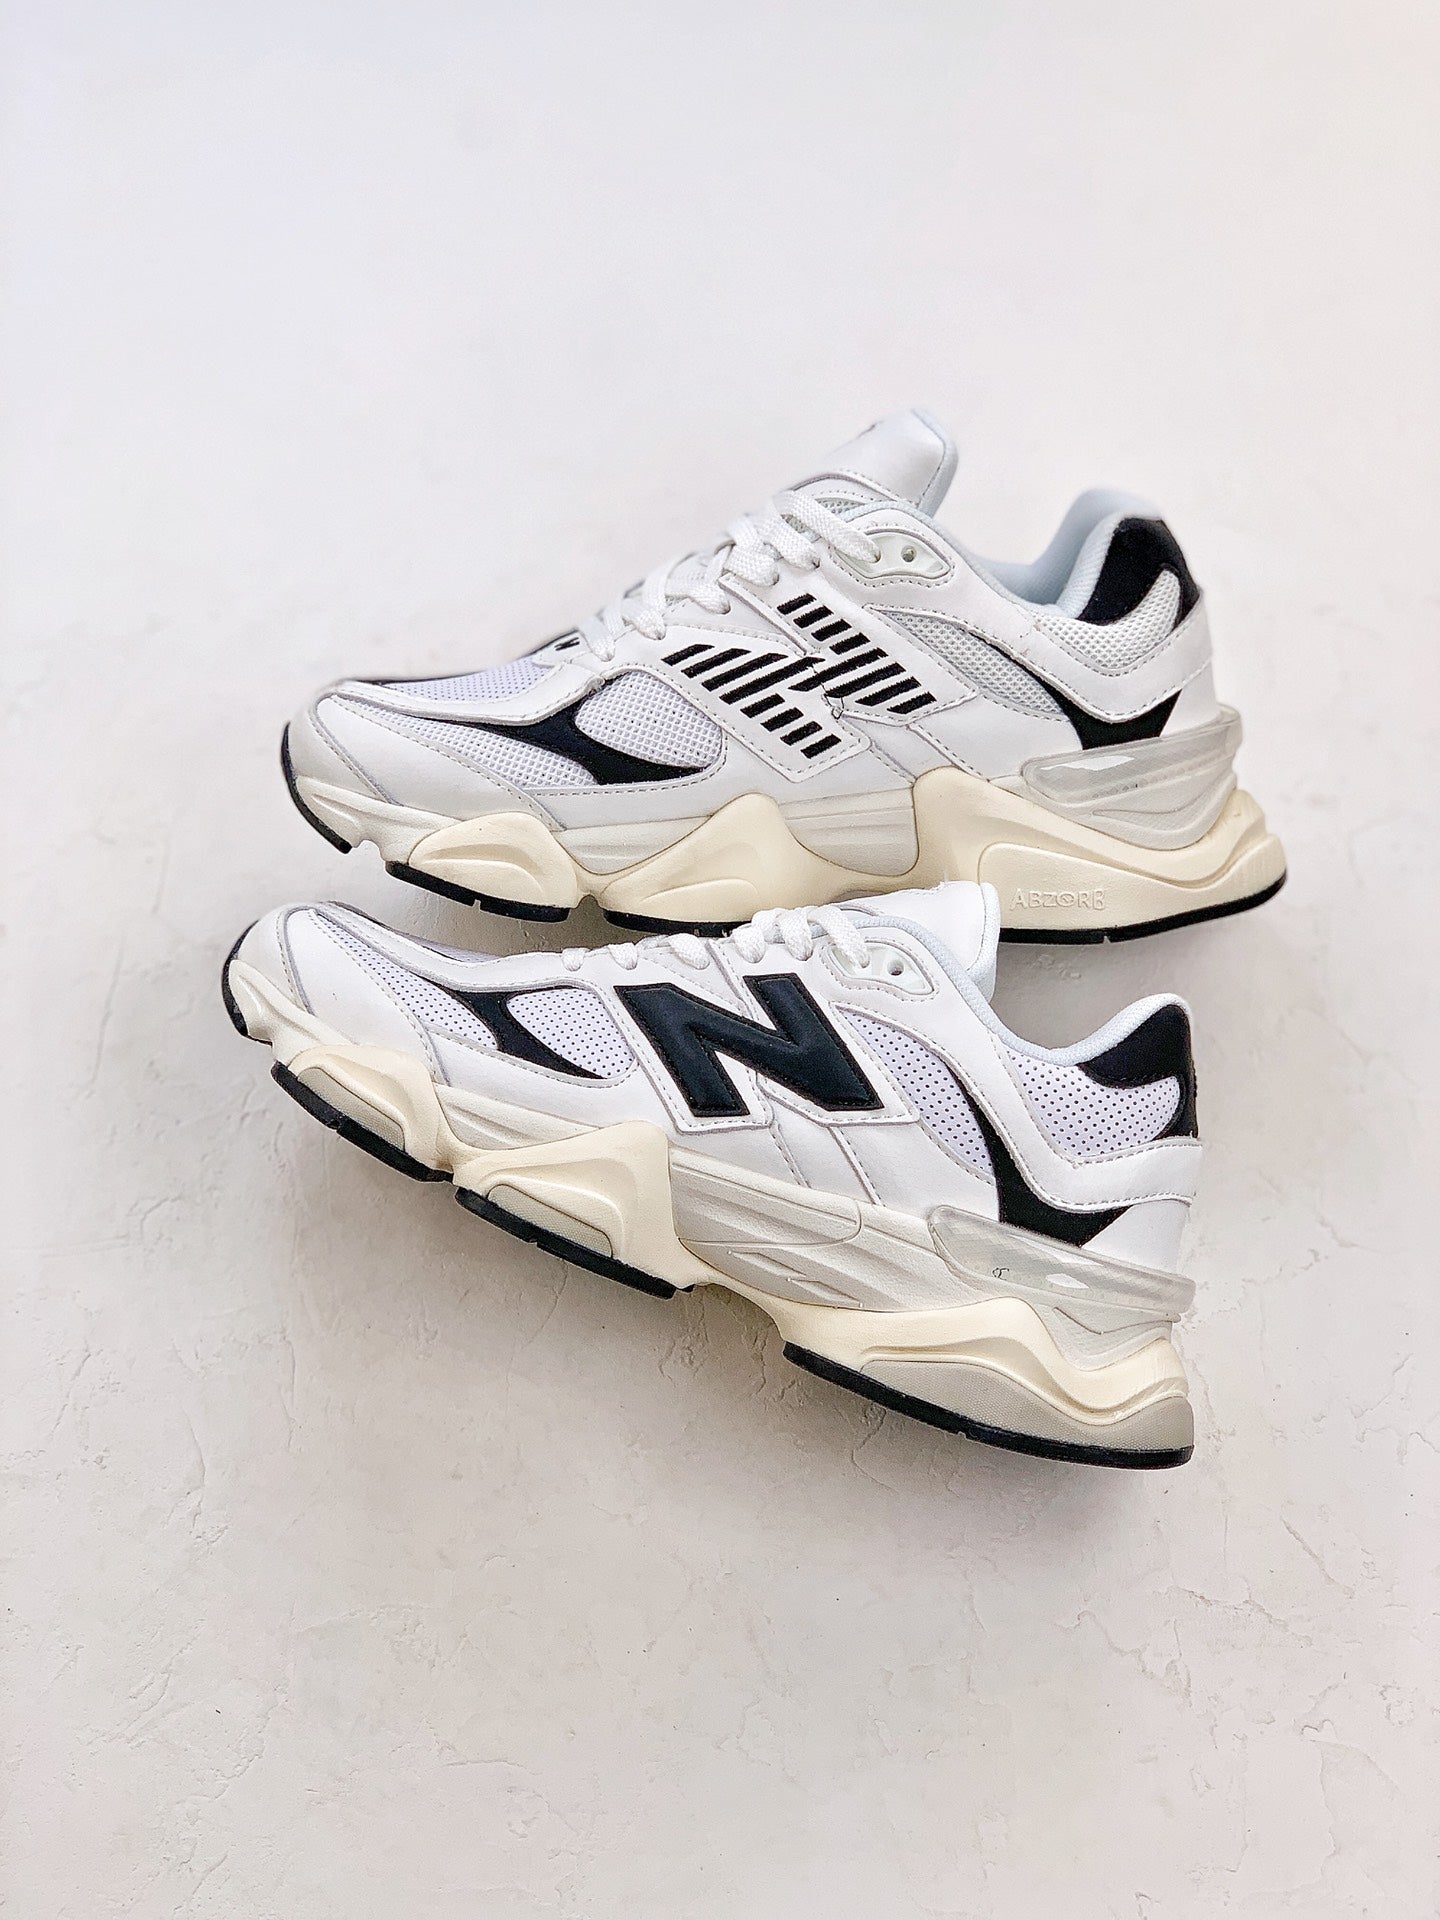 New Balance NB 9060 White/Black